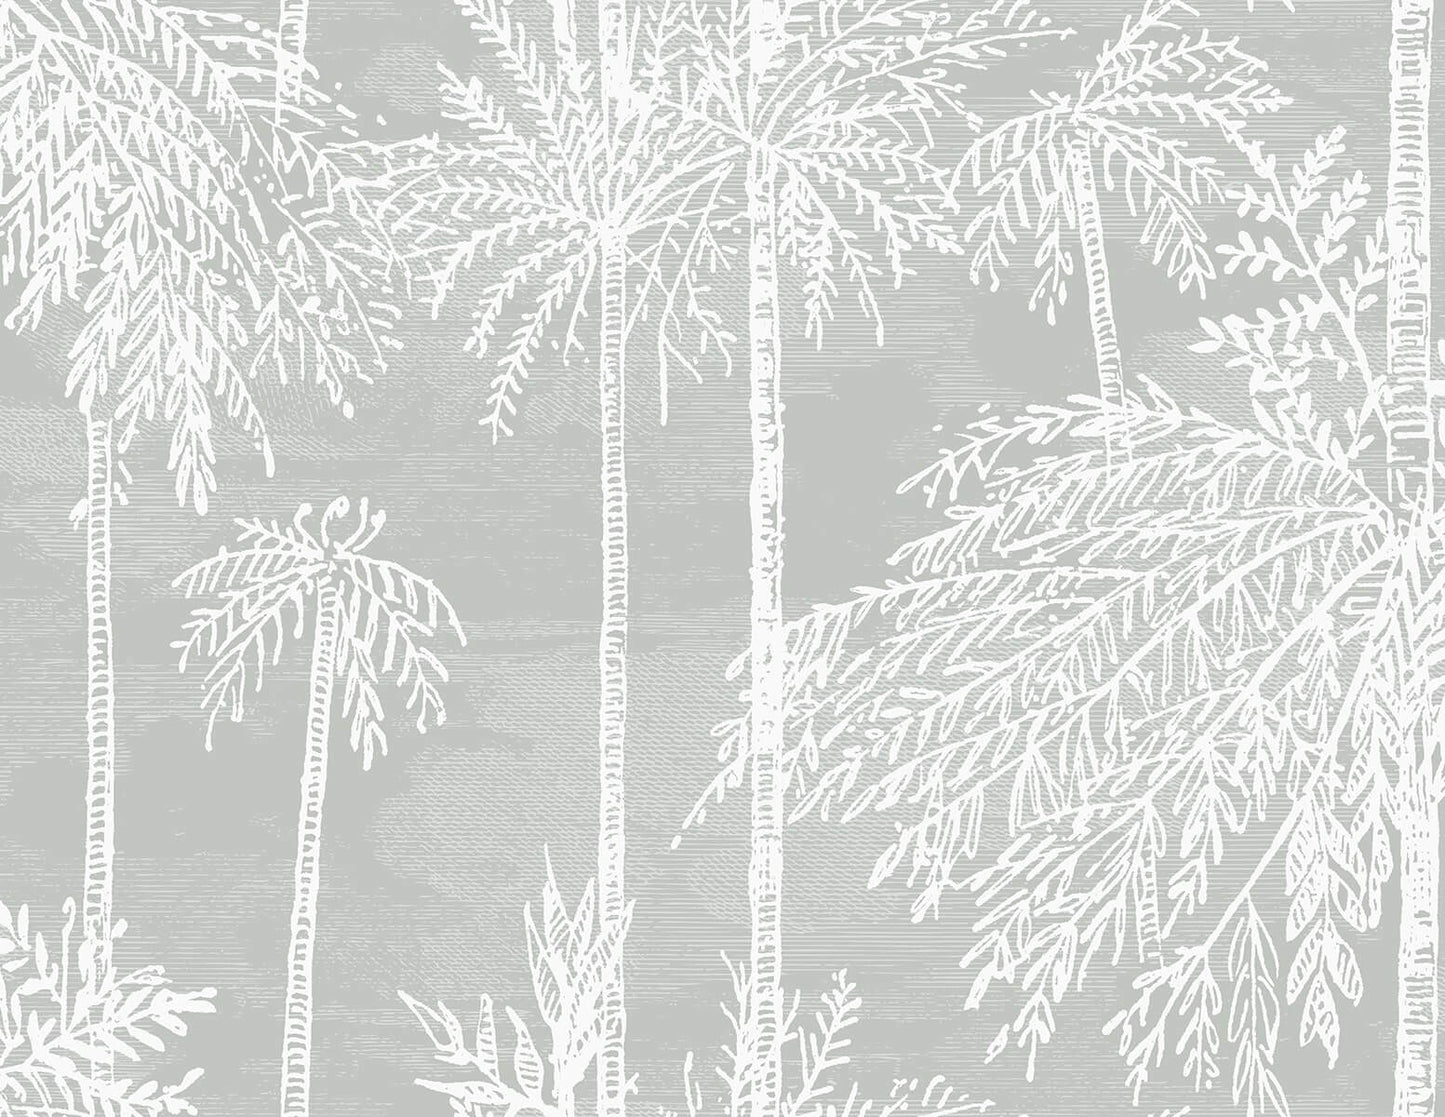 Lillian August Coastal Haven Palm Grove Wallpaper - Misty Grey